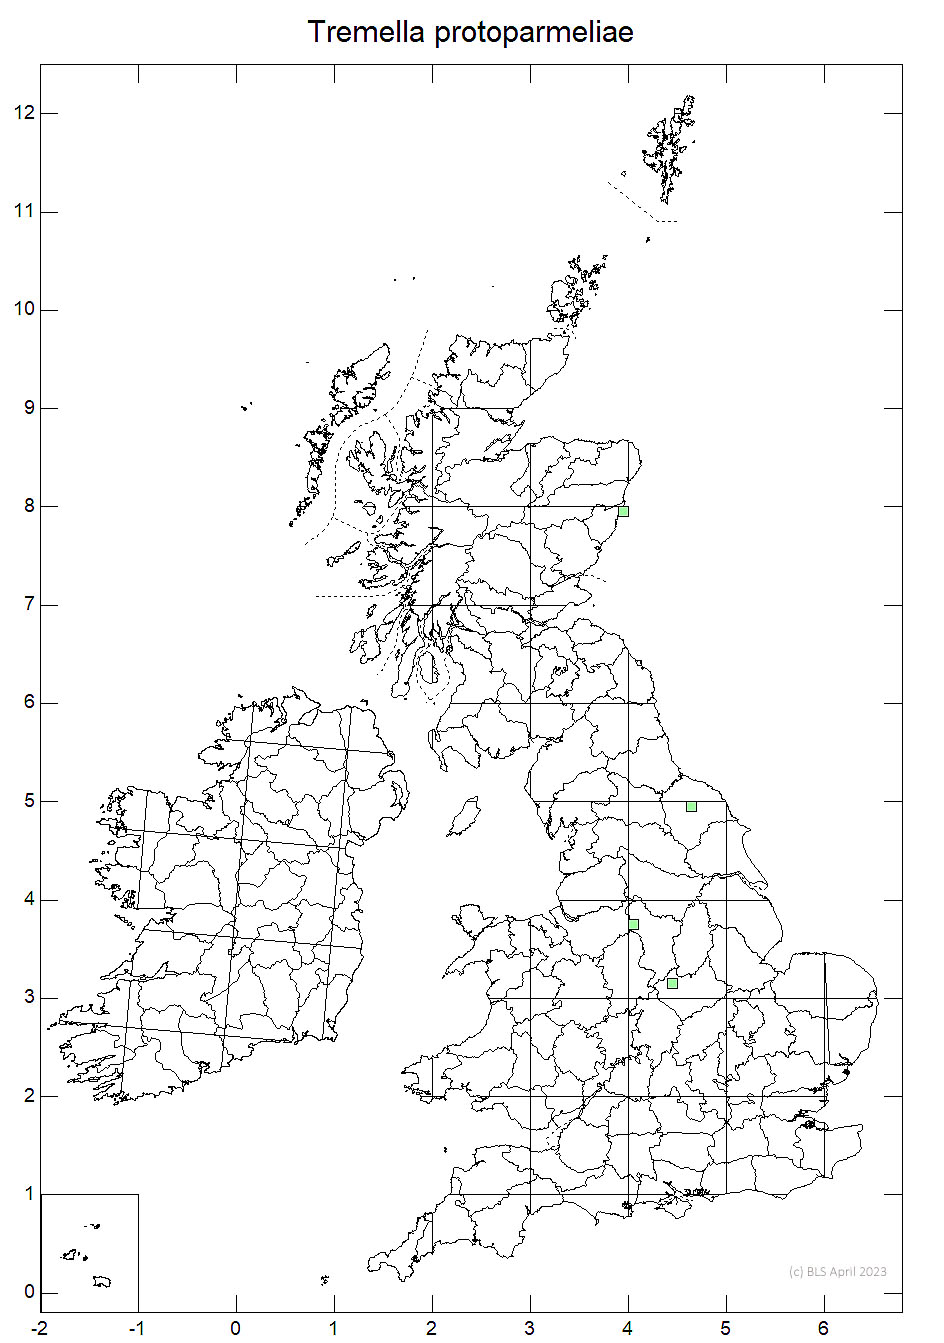 Tremella protoparmeliae 10km sq distribution map